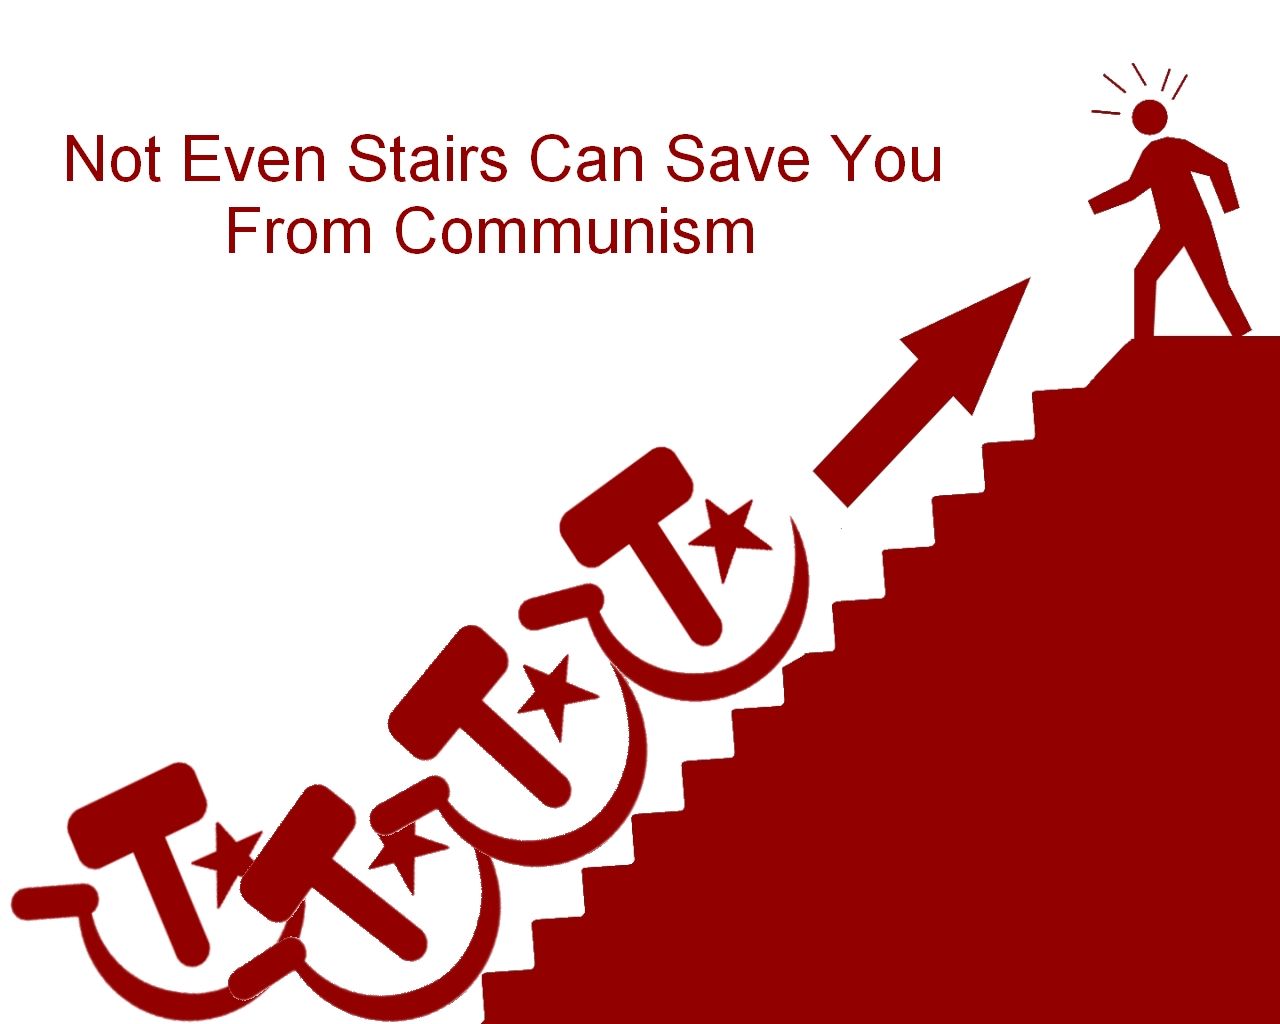 man made, communism, red